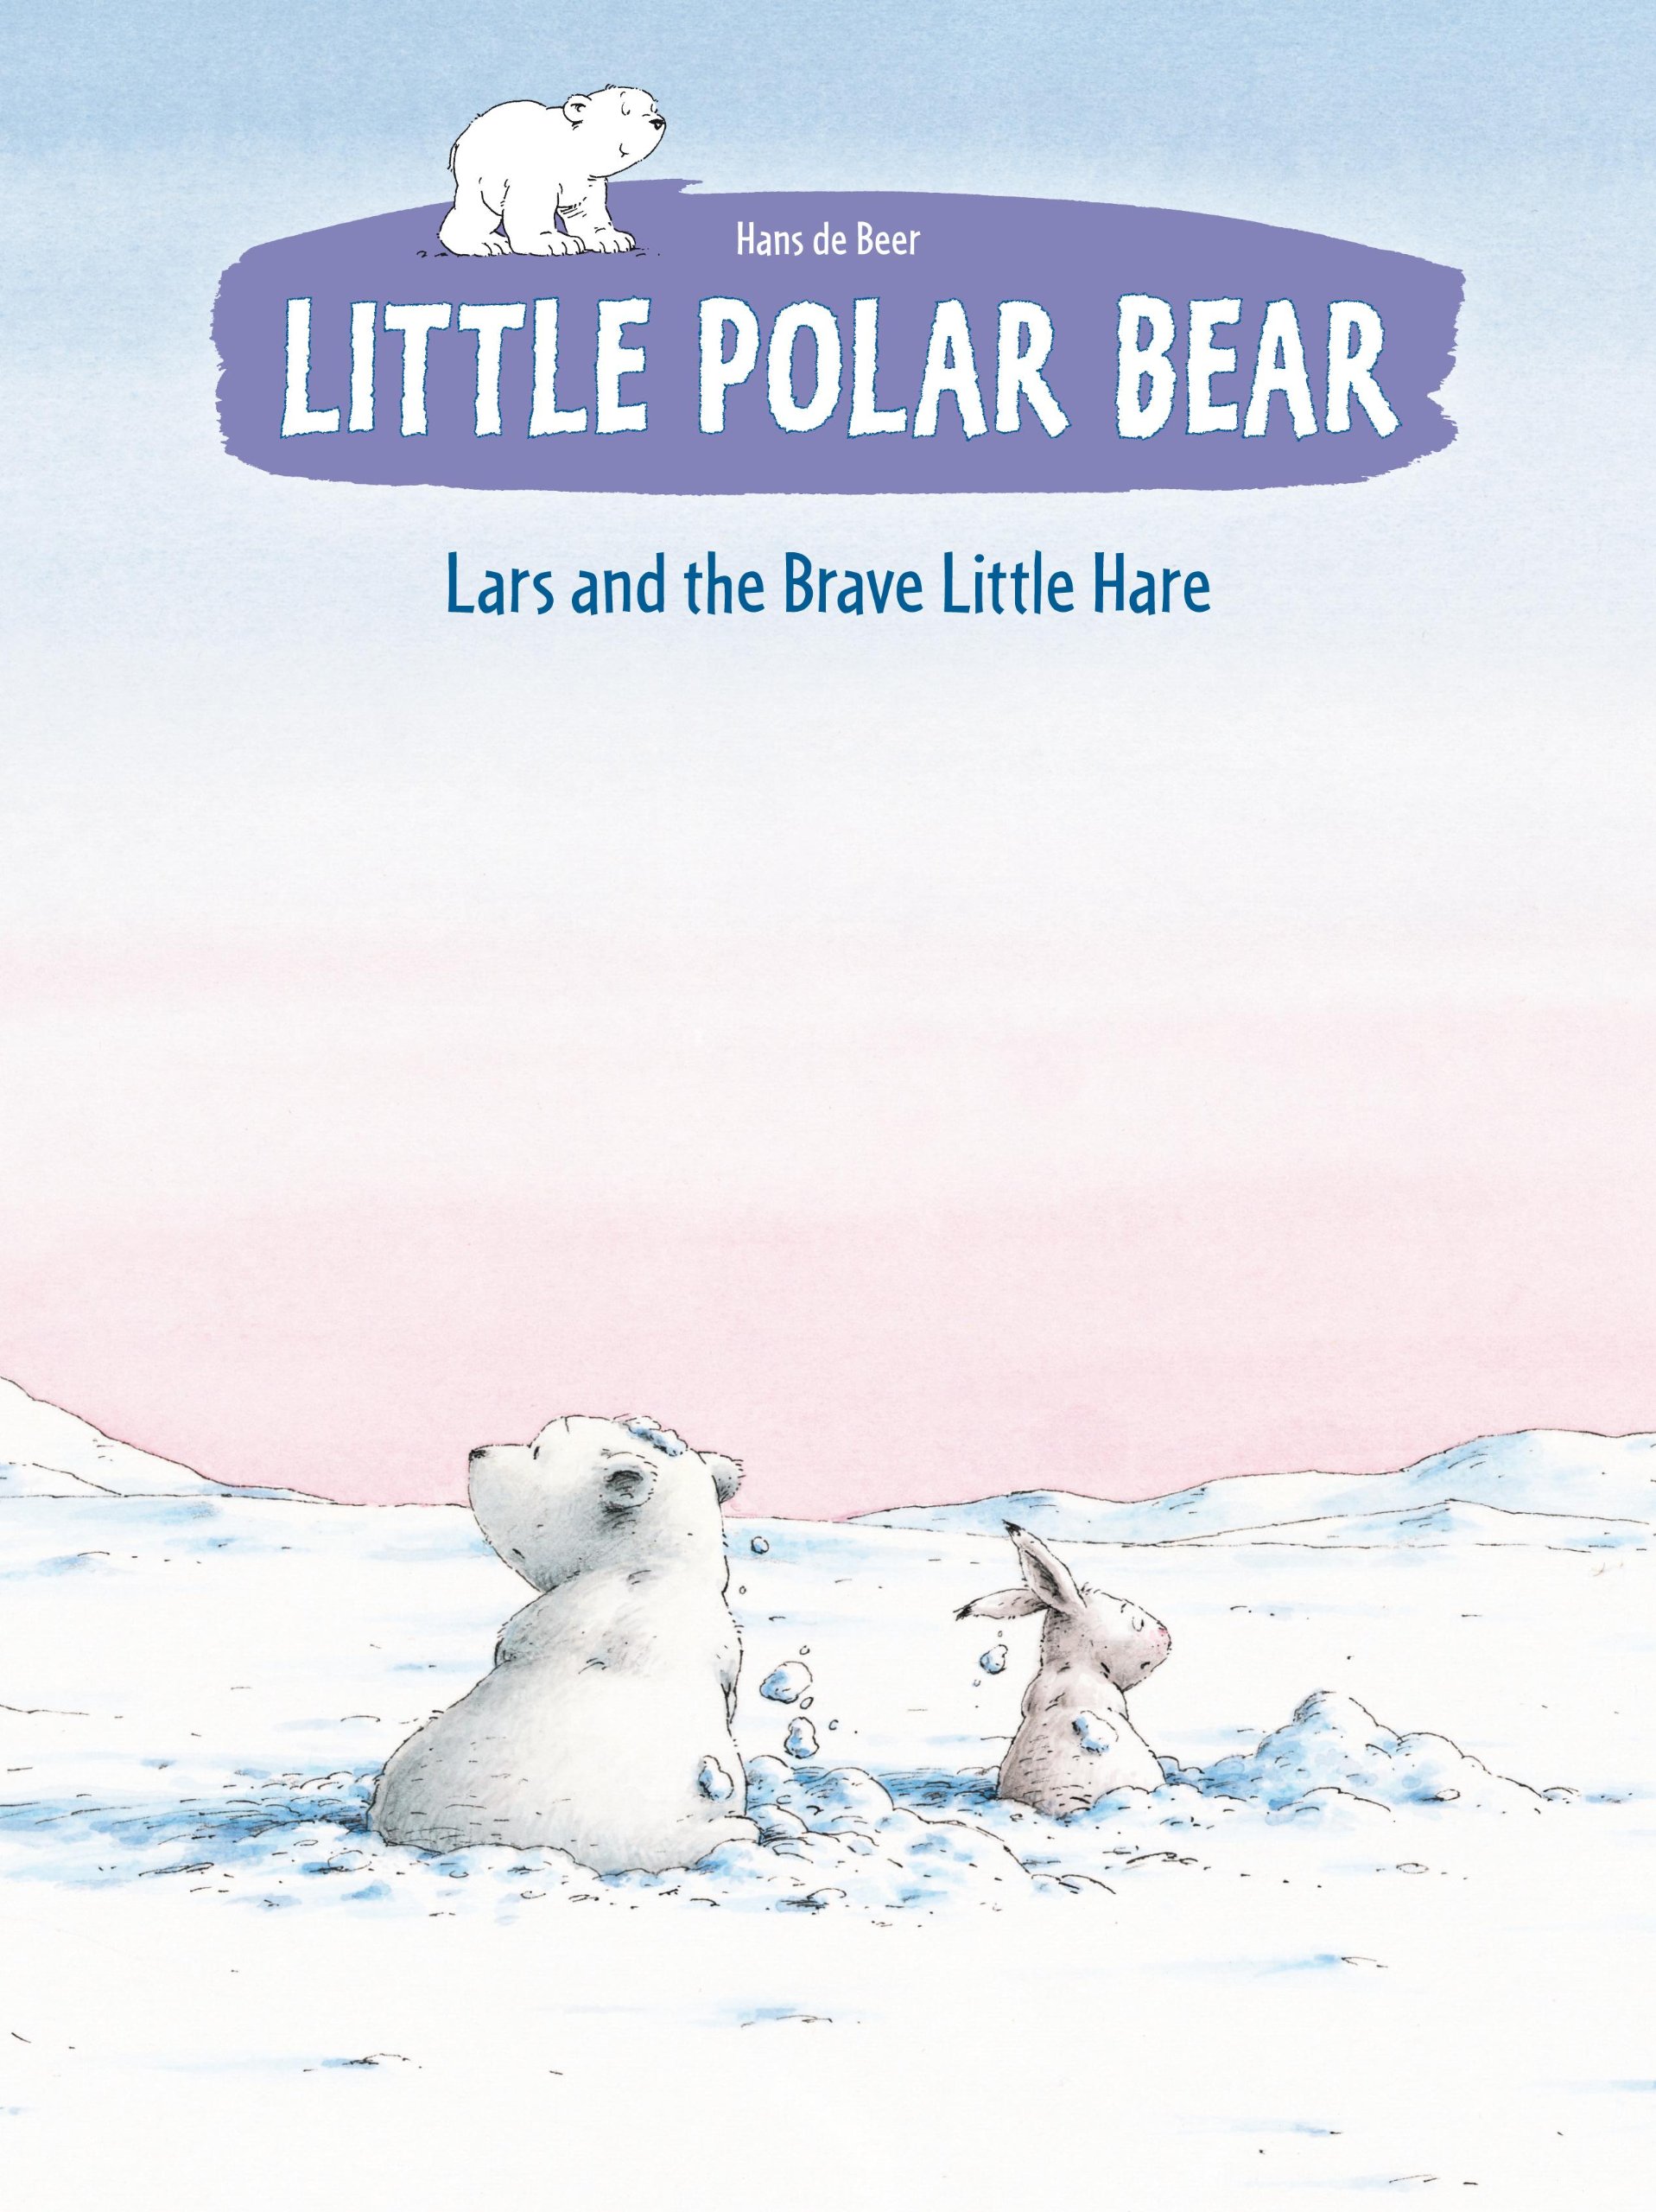 Little Polar Bear and the brave little hare